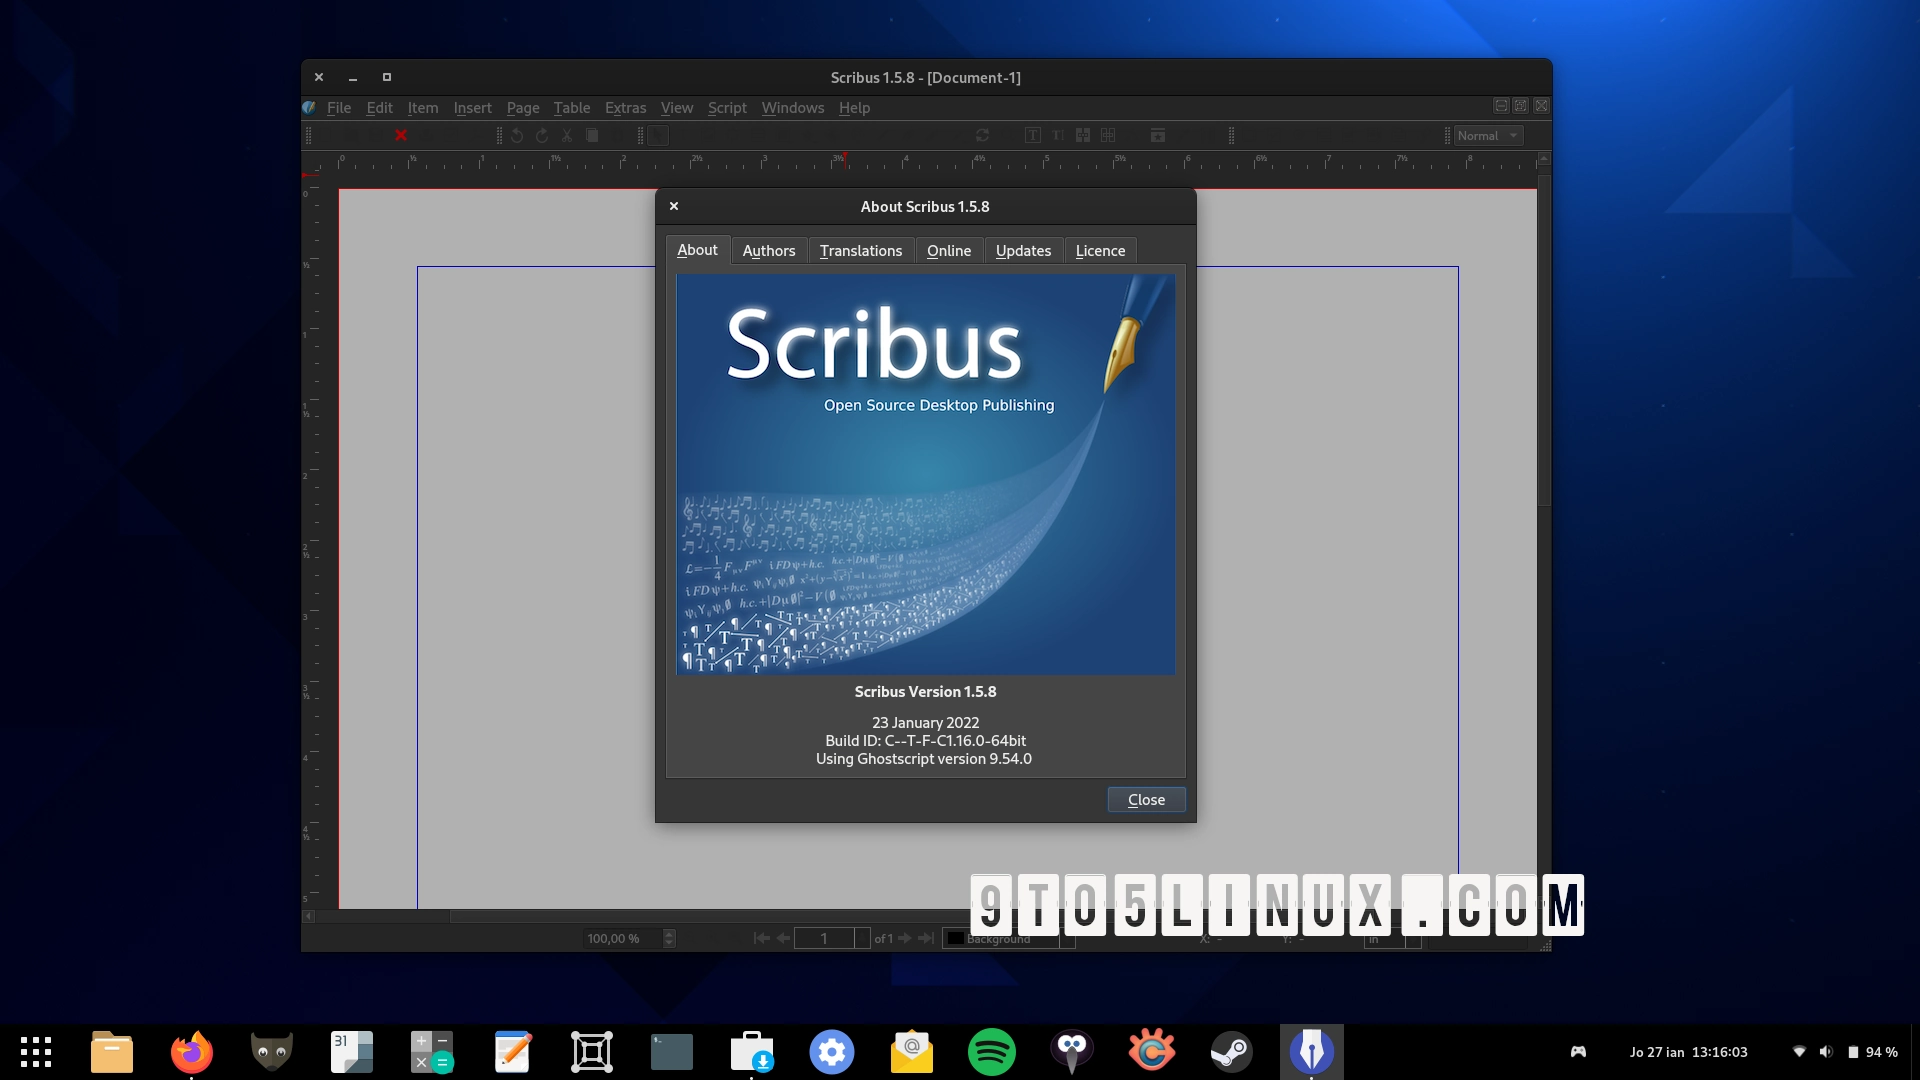 Scribus 1.5.8 Powerful Desktop Publishing App Brings More Improvements, Qt 6 Porting Begins